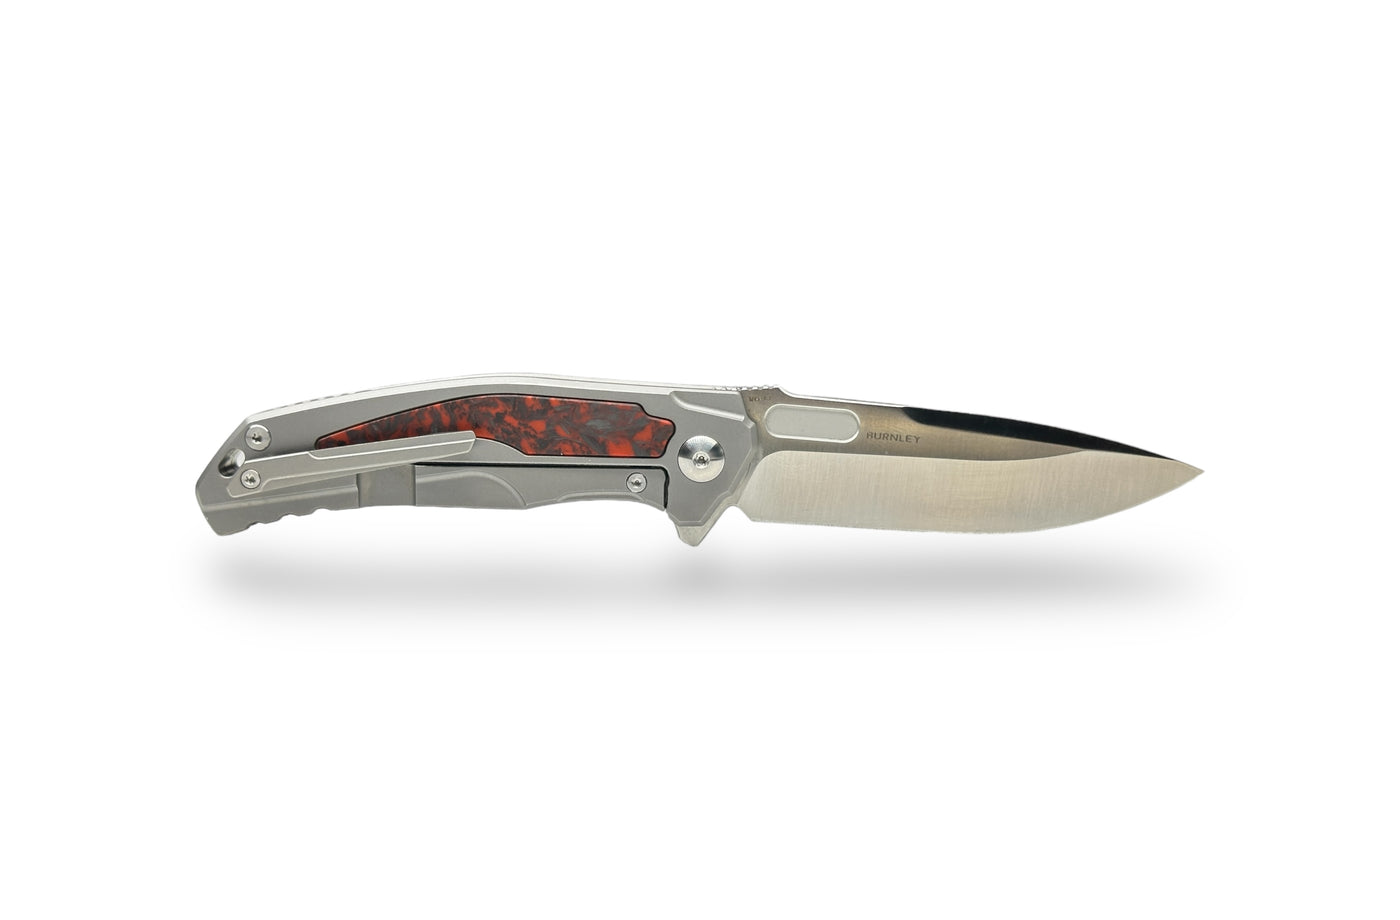 Apex Mini Wild Carbon Fiber / Titanium - Burnley Knife - Boker Plus